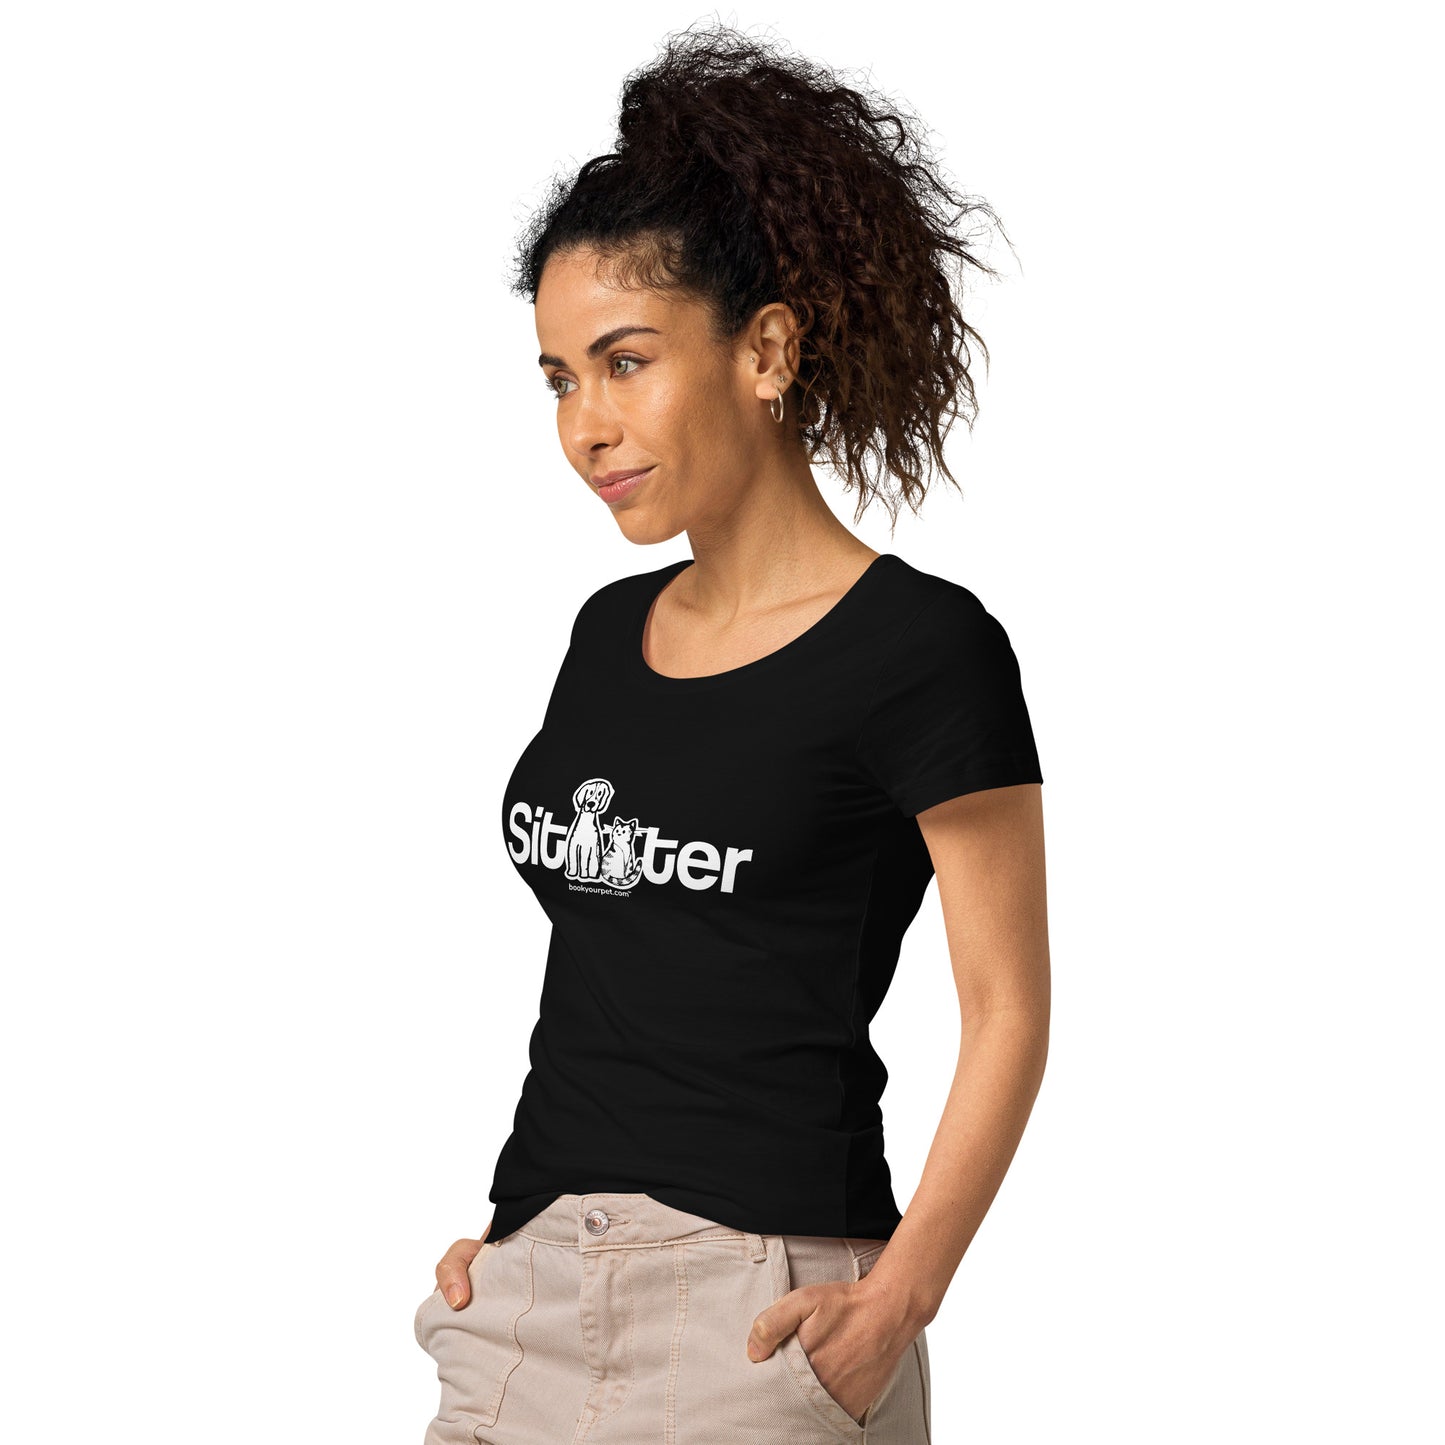 Women’s basic Sitter organic t-shirt